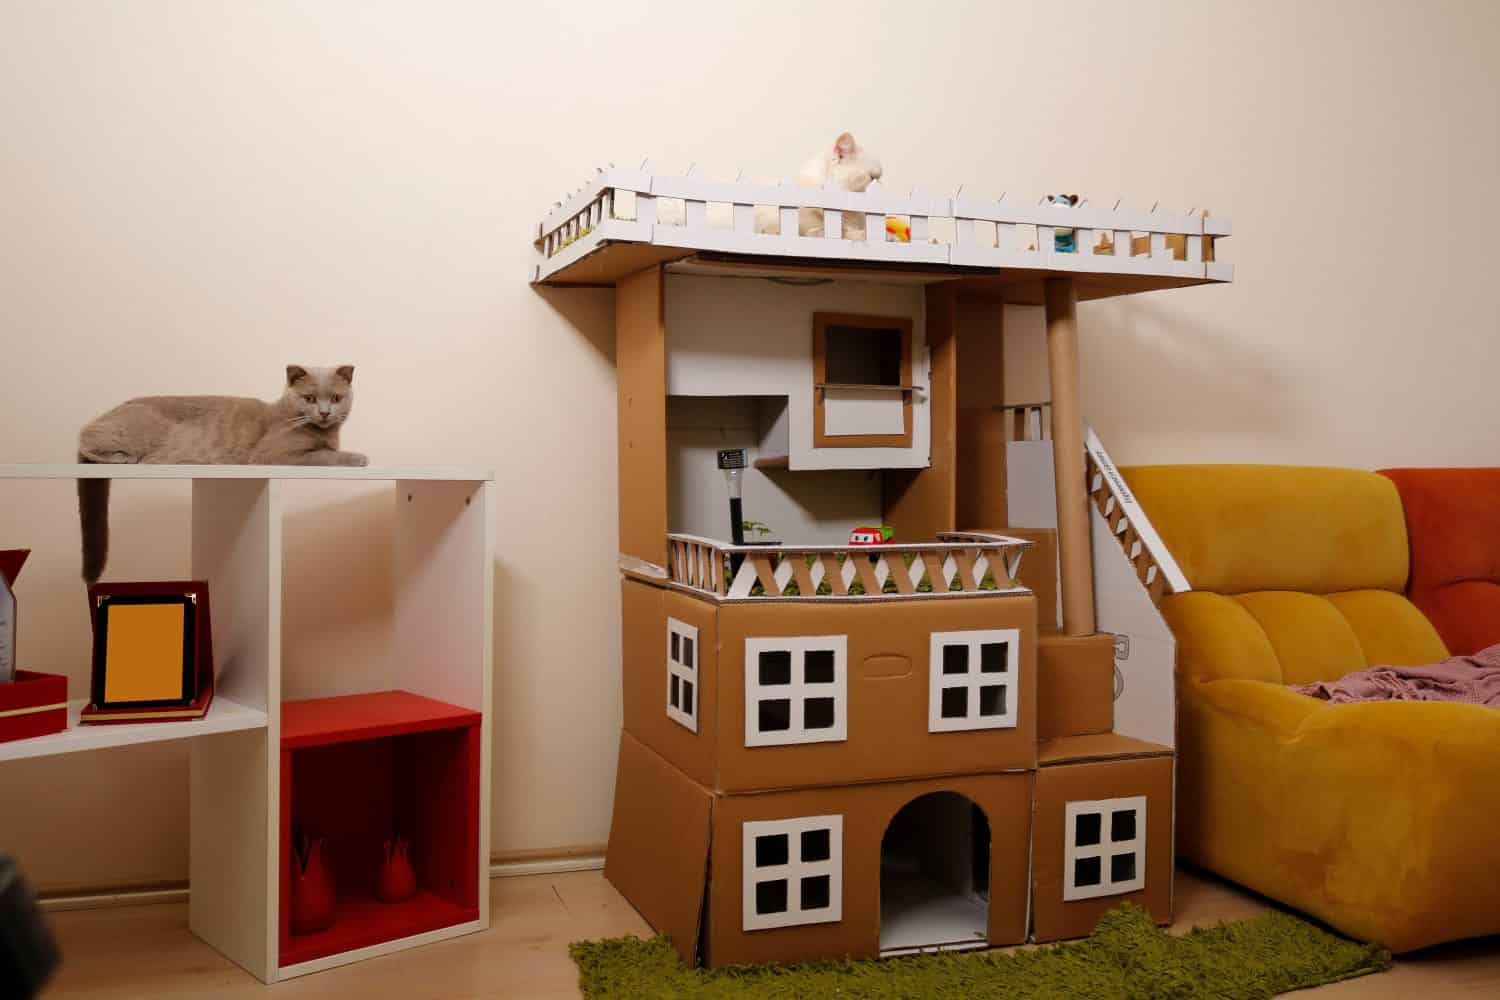 handmade cat house with using cardboard